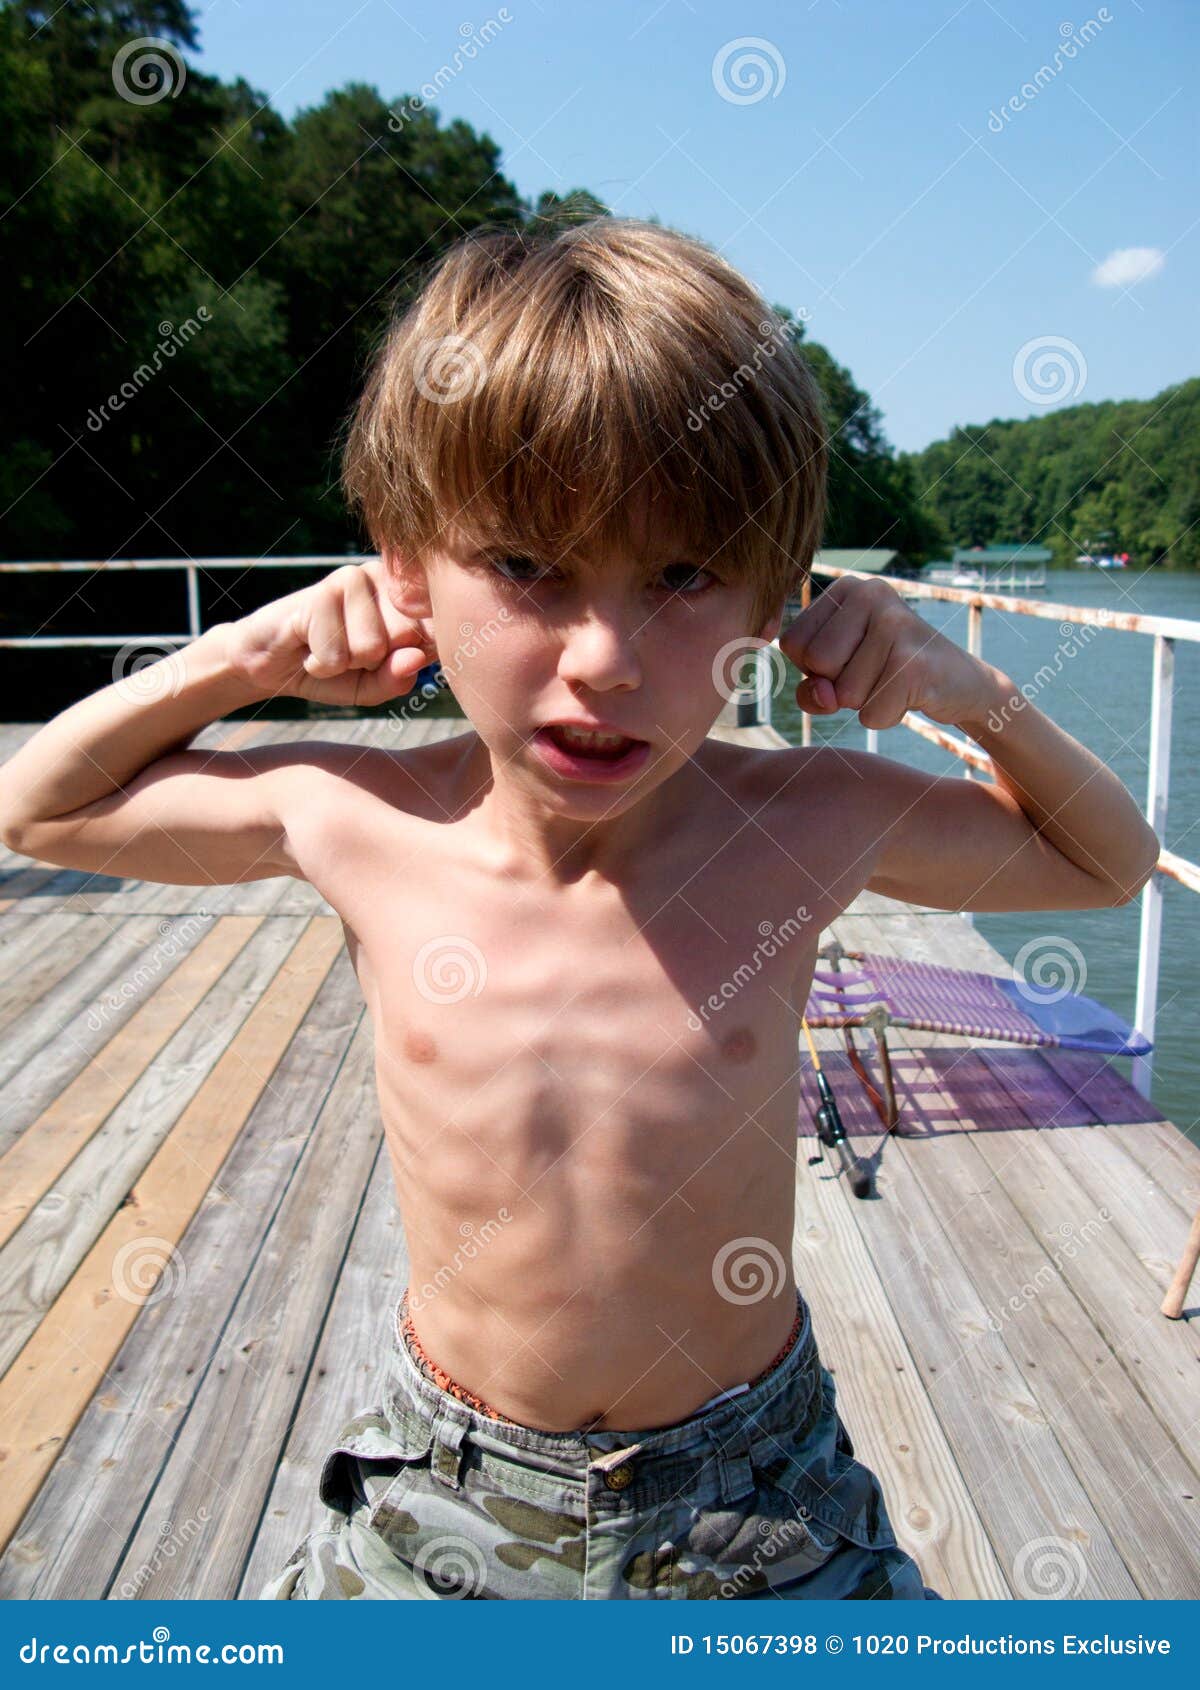 Boy pulling funny face stock photo. Image of single, child - 15067398